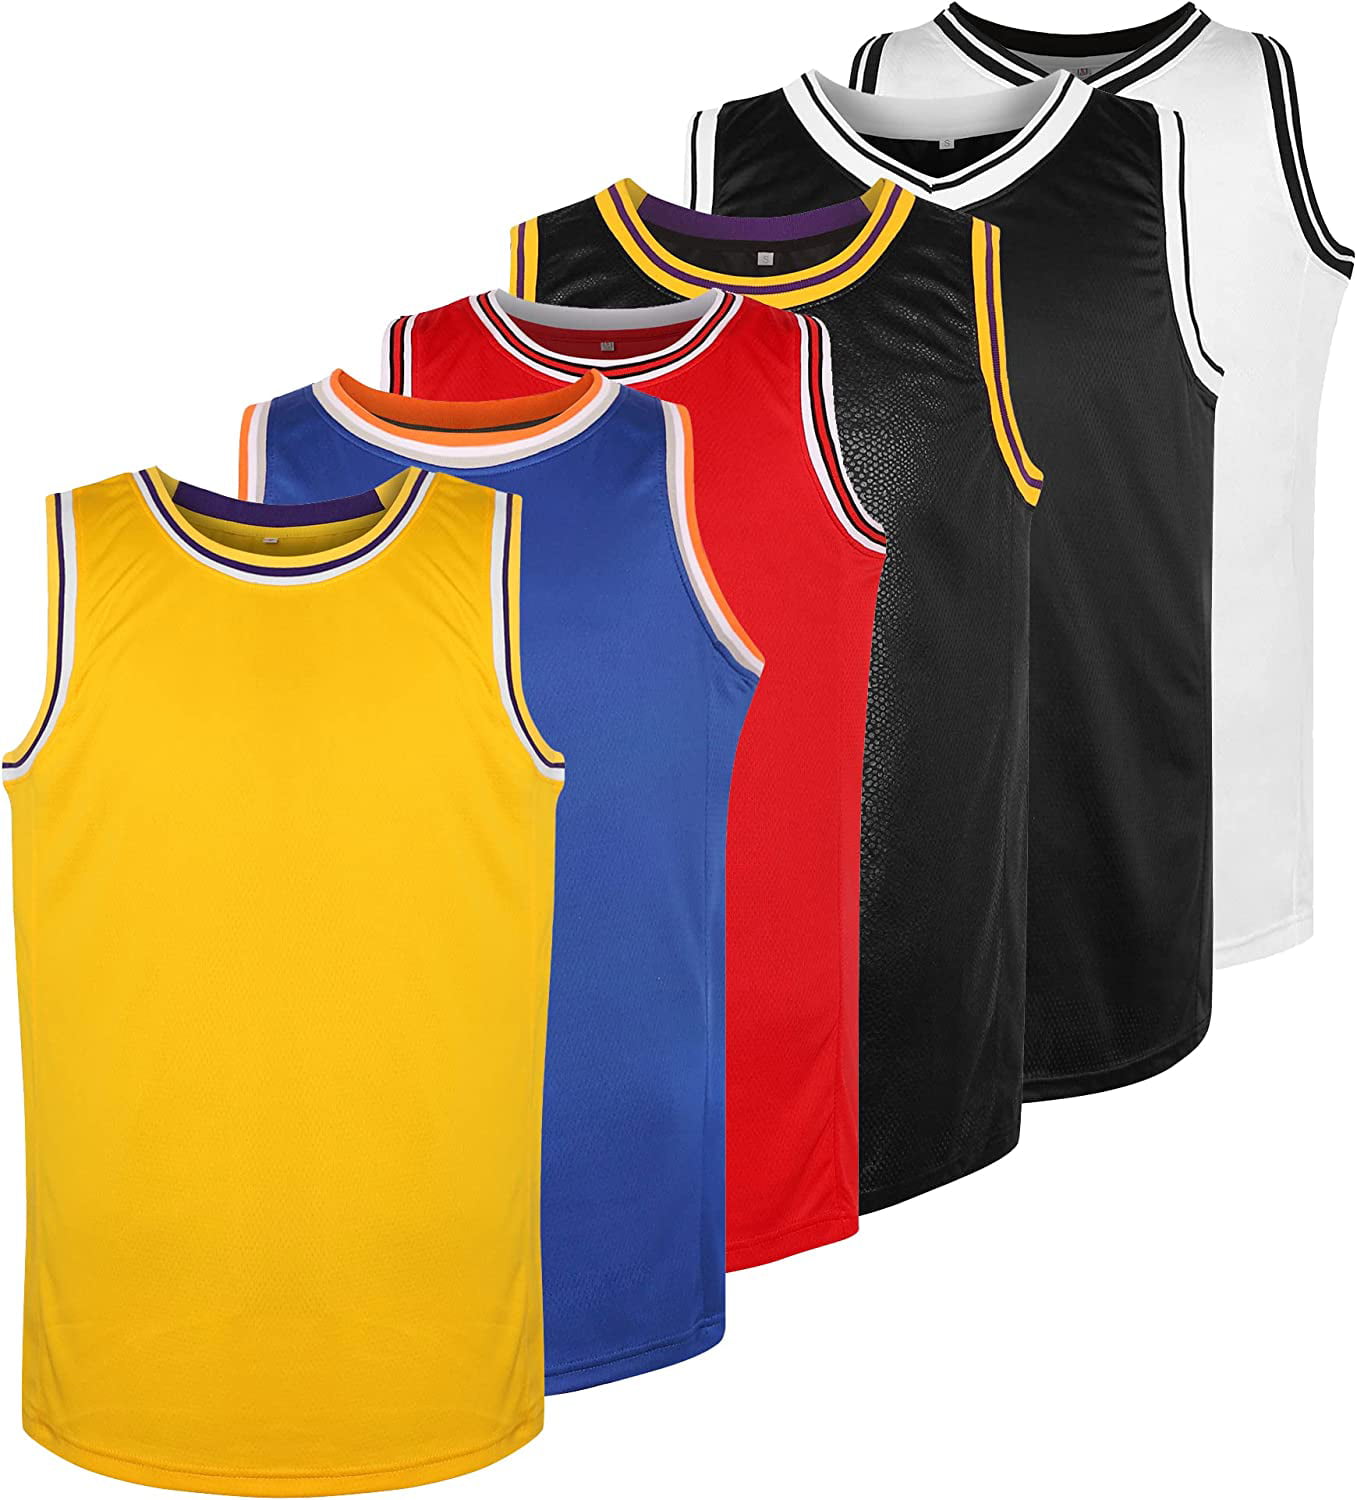 MESOSPERO Blank Basketball Jersey Men's Mesh Athletic Sports Shirts Black Yellow White S-3XL 